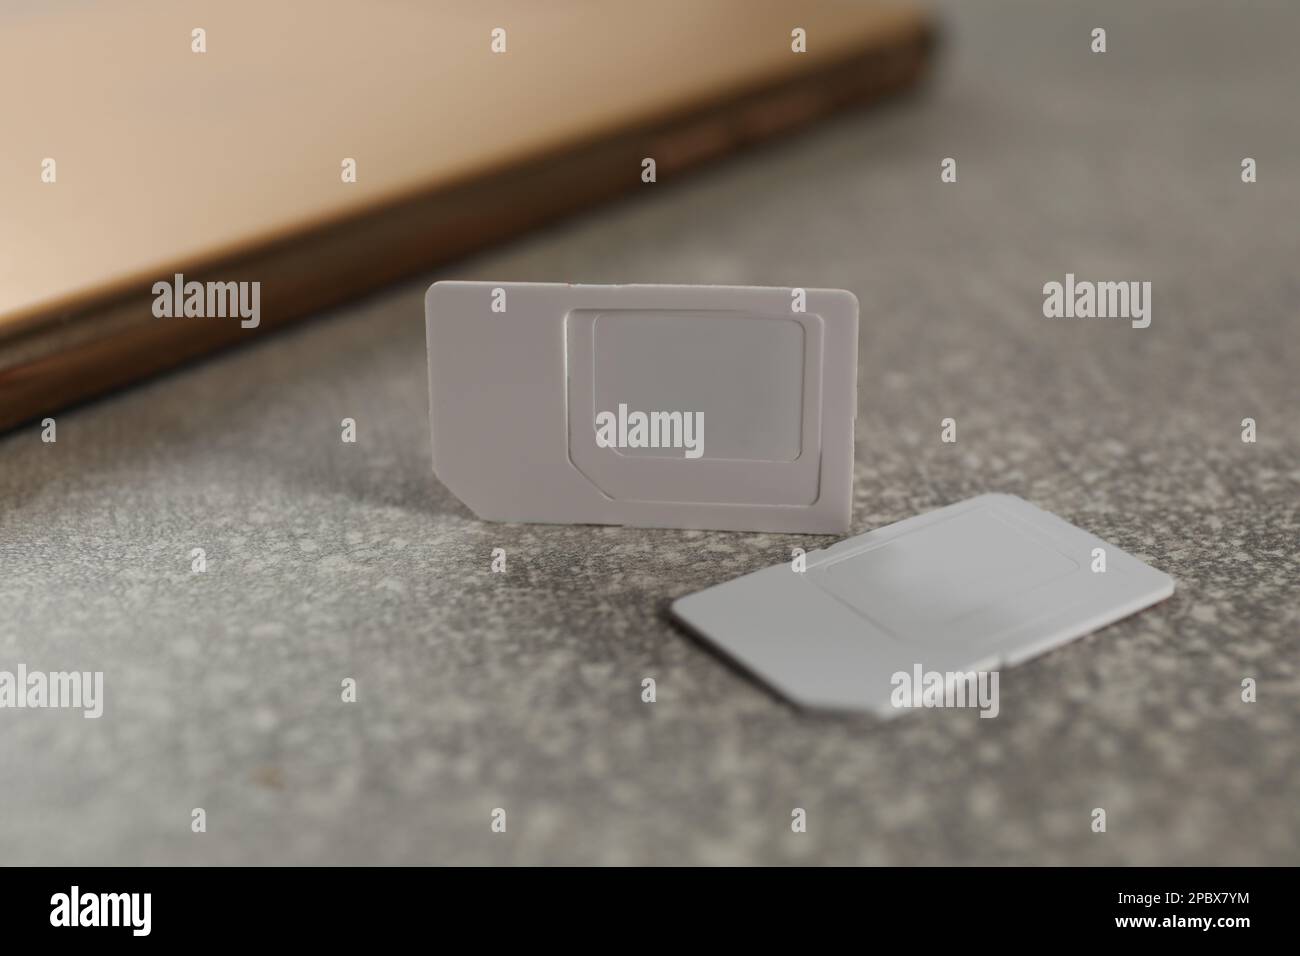 White multi SIM cards on grey table, closeup Stock Photo